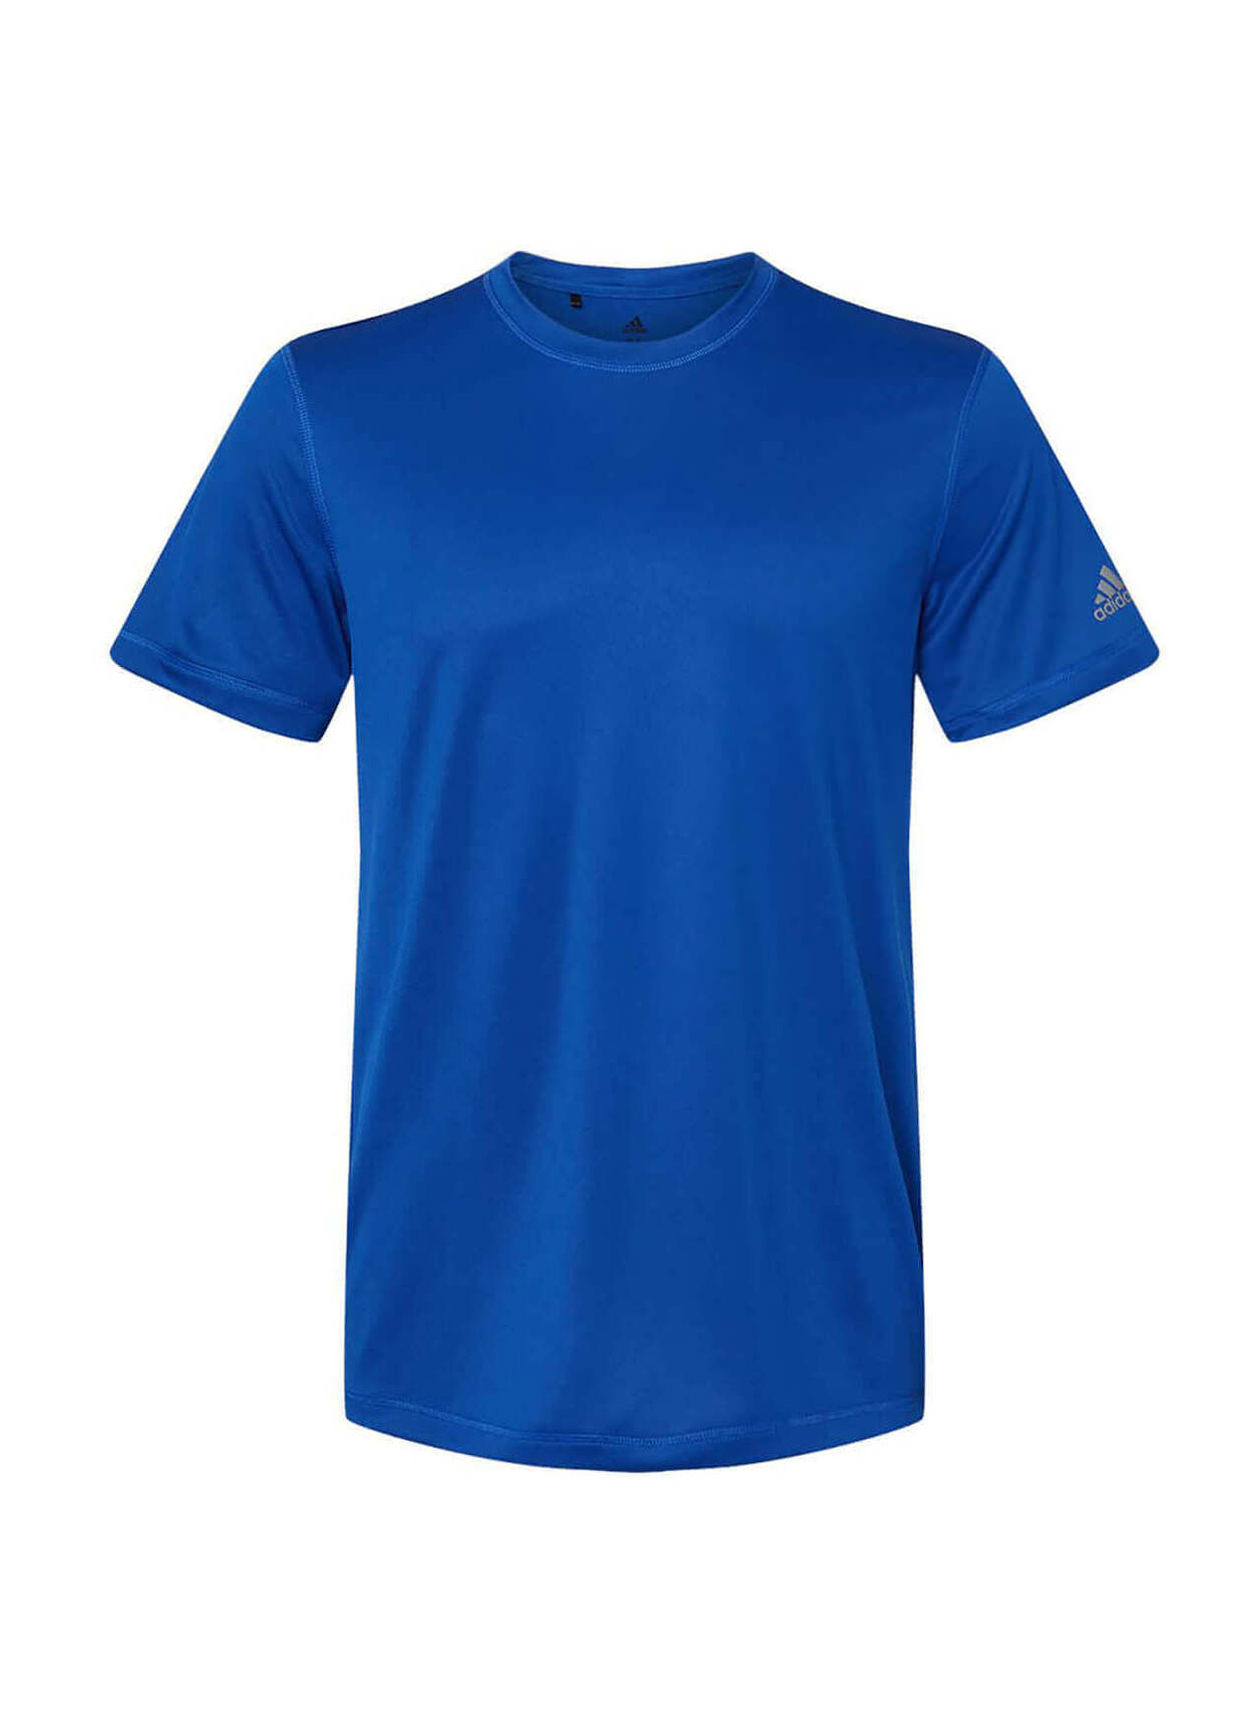 Custom Made Adidas Men's Collegiate Royal Sport Short-Sleeve T-Shirt